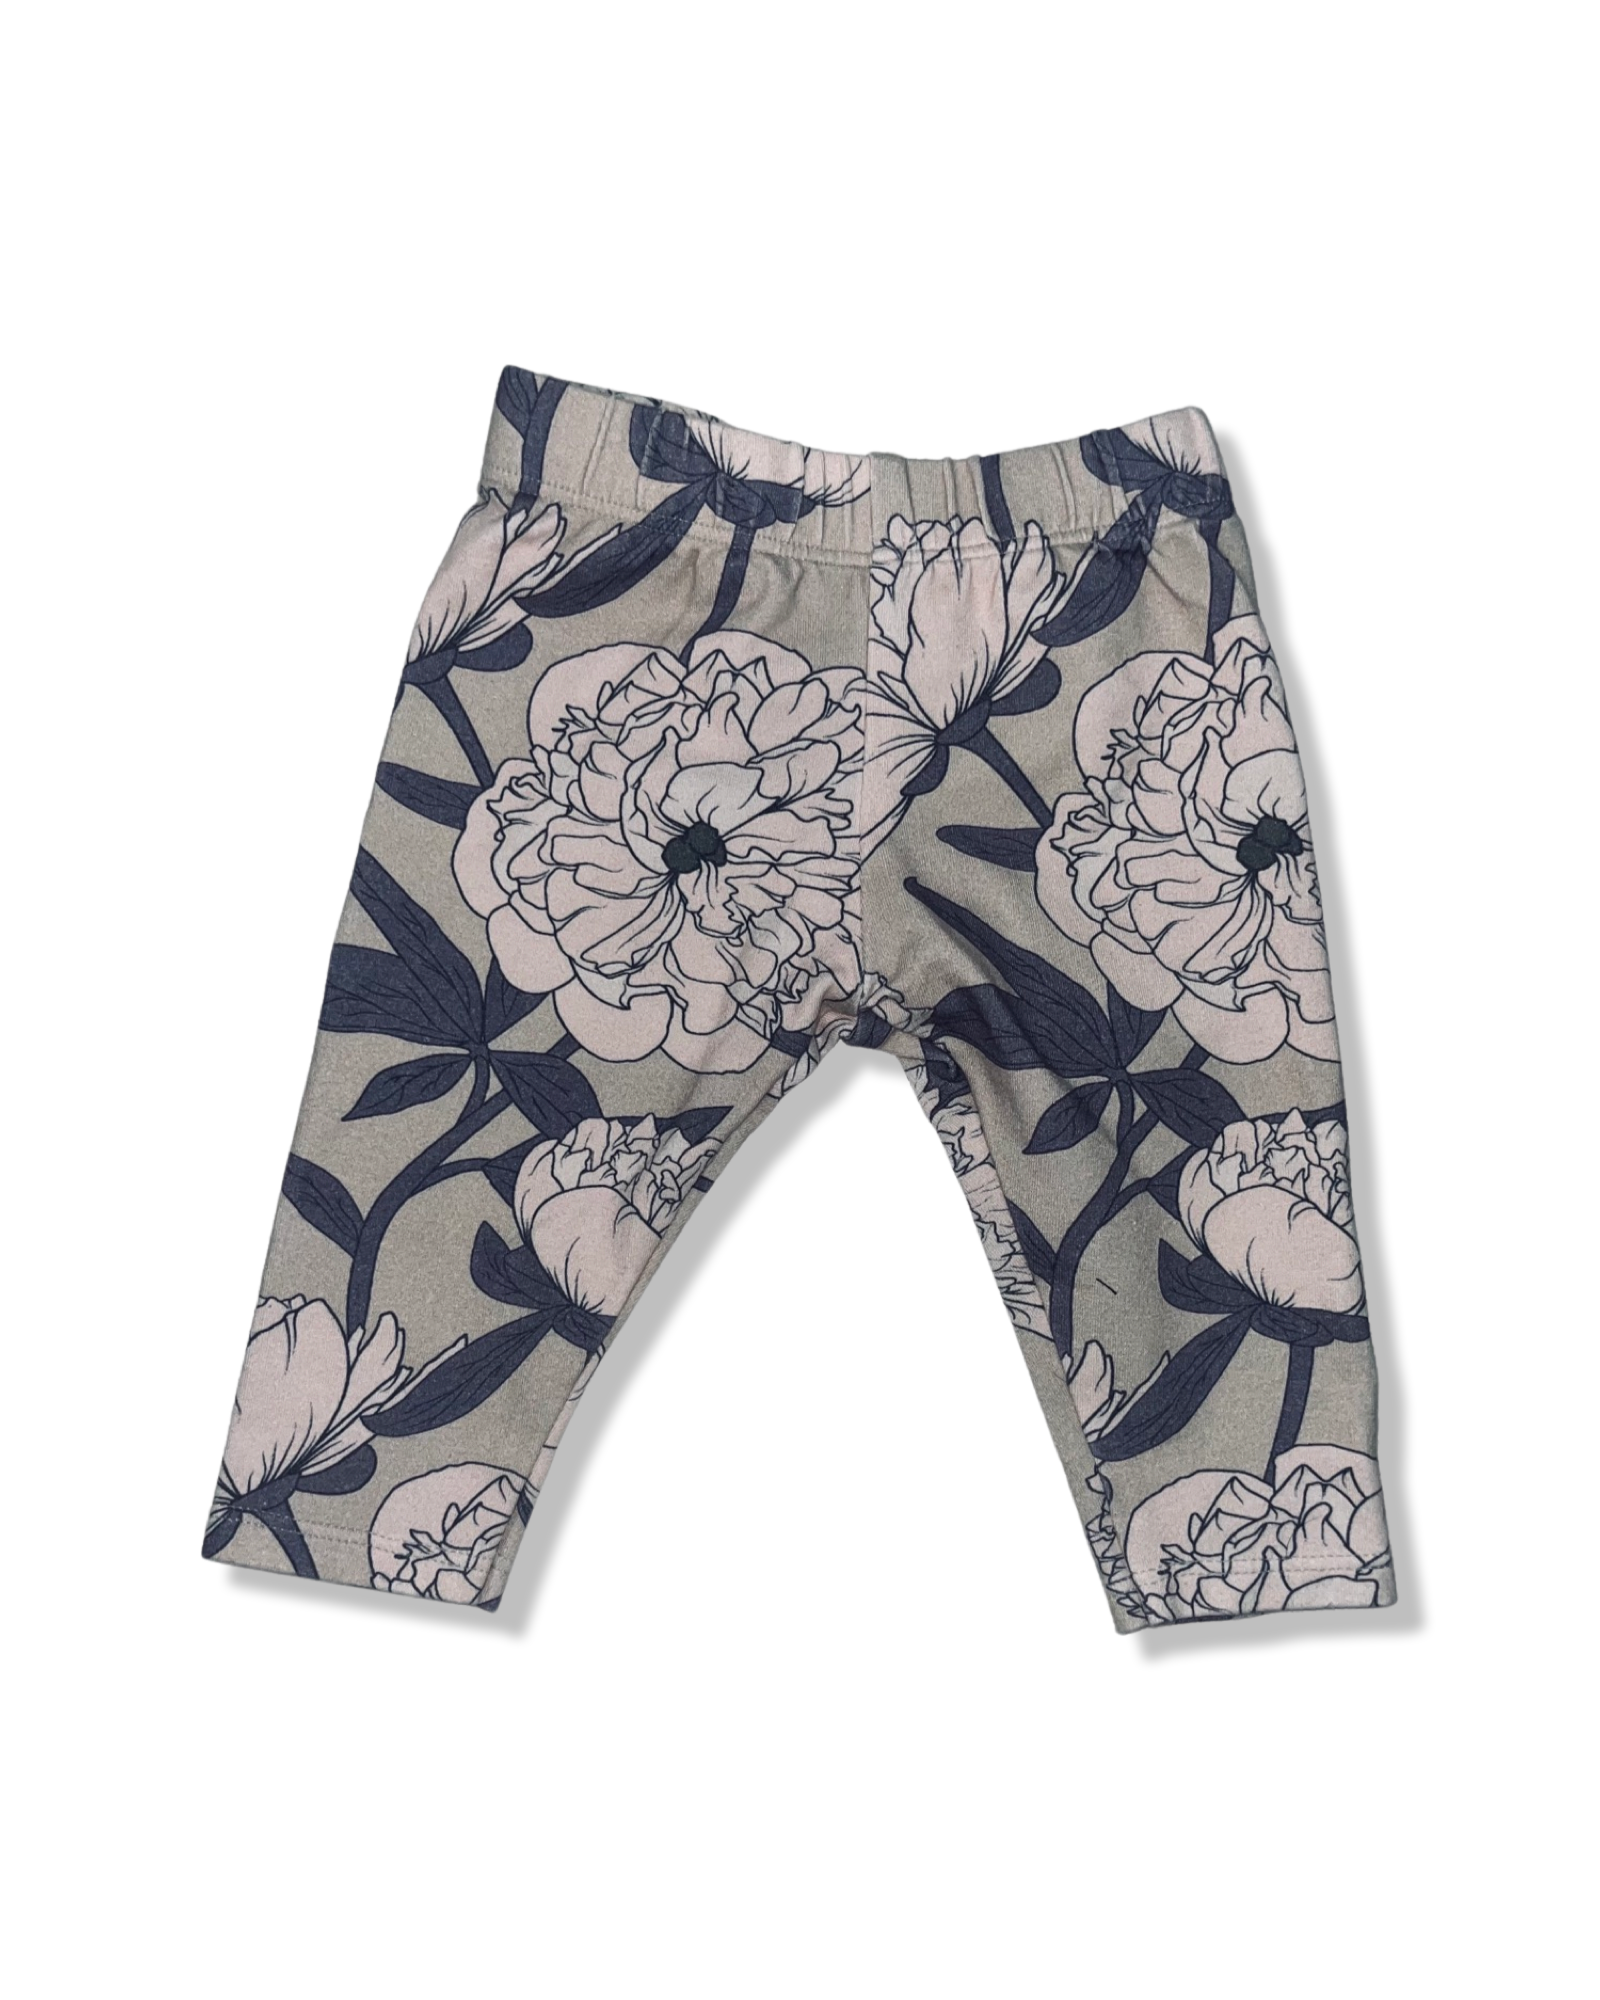 Ollie Jones Floral Print Pants (3-6M)